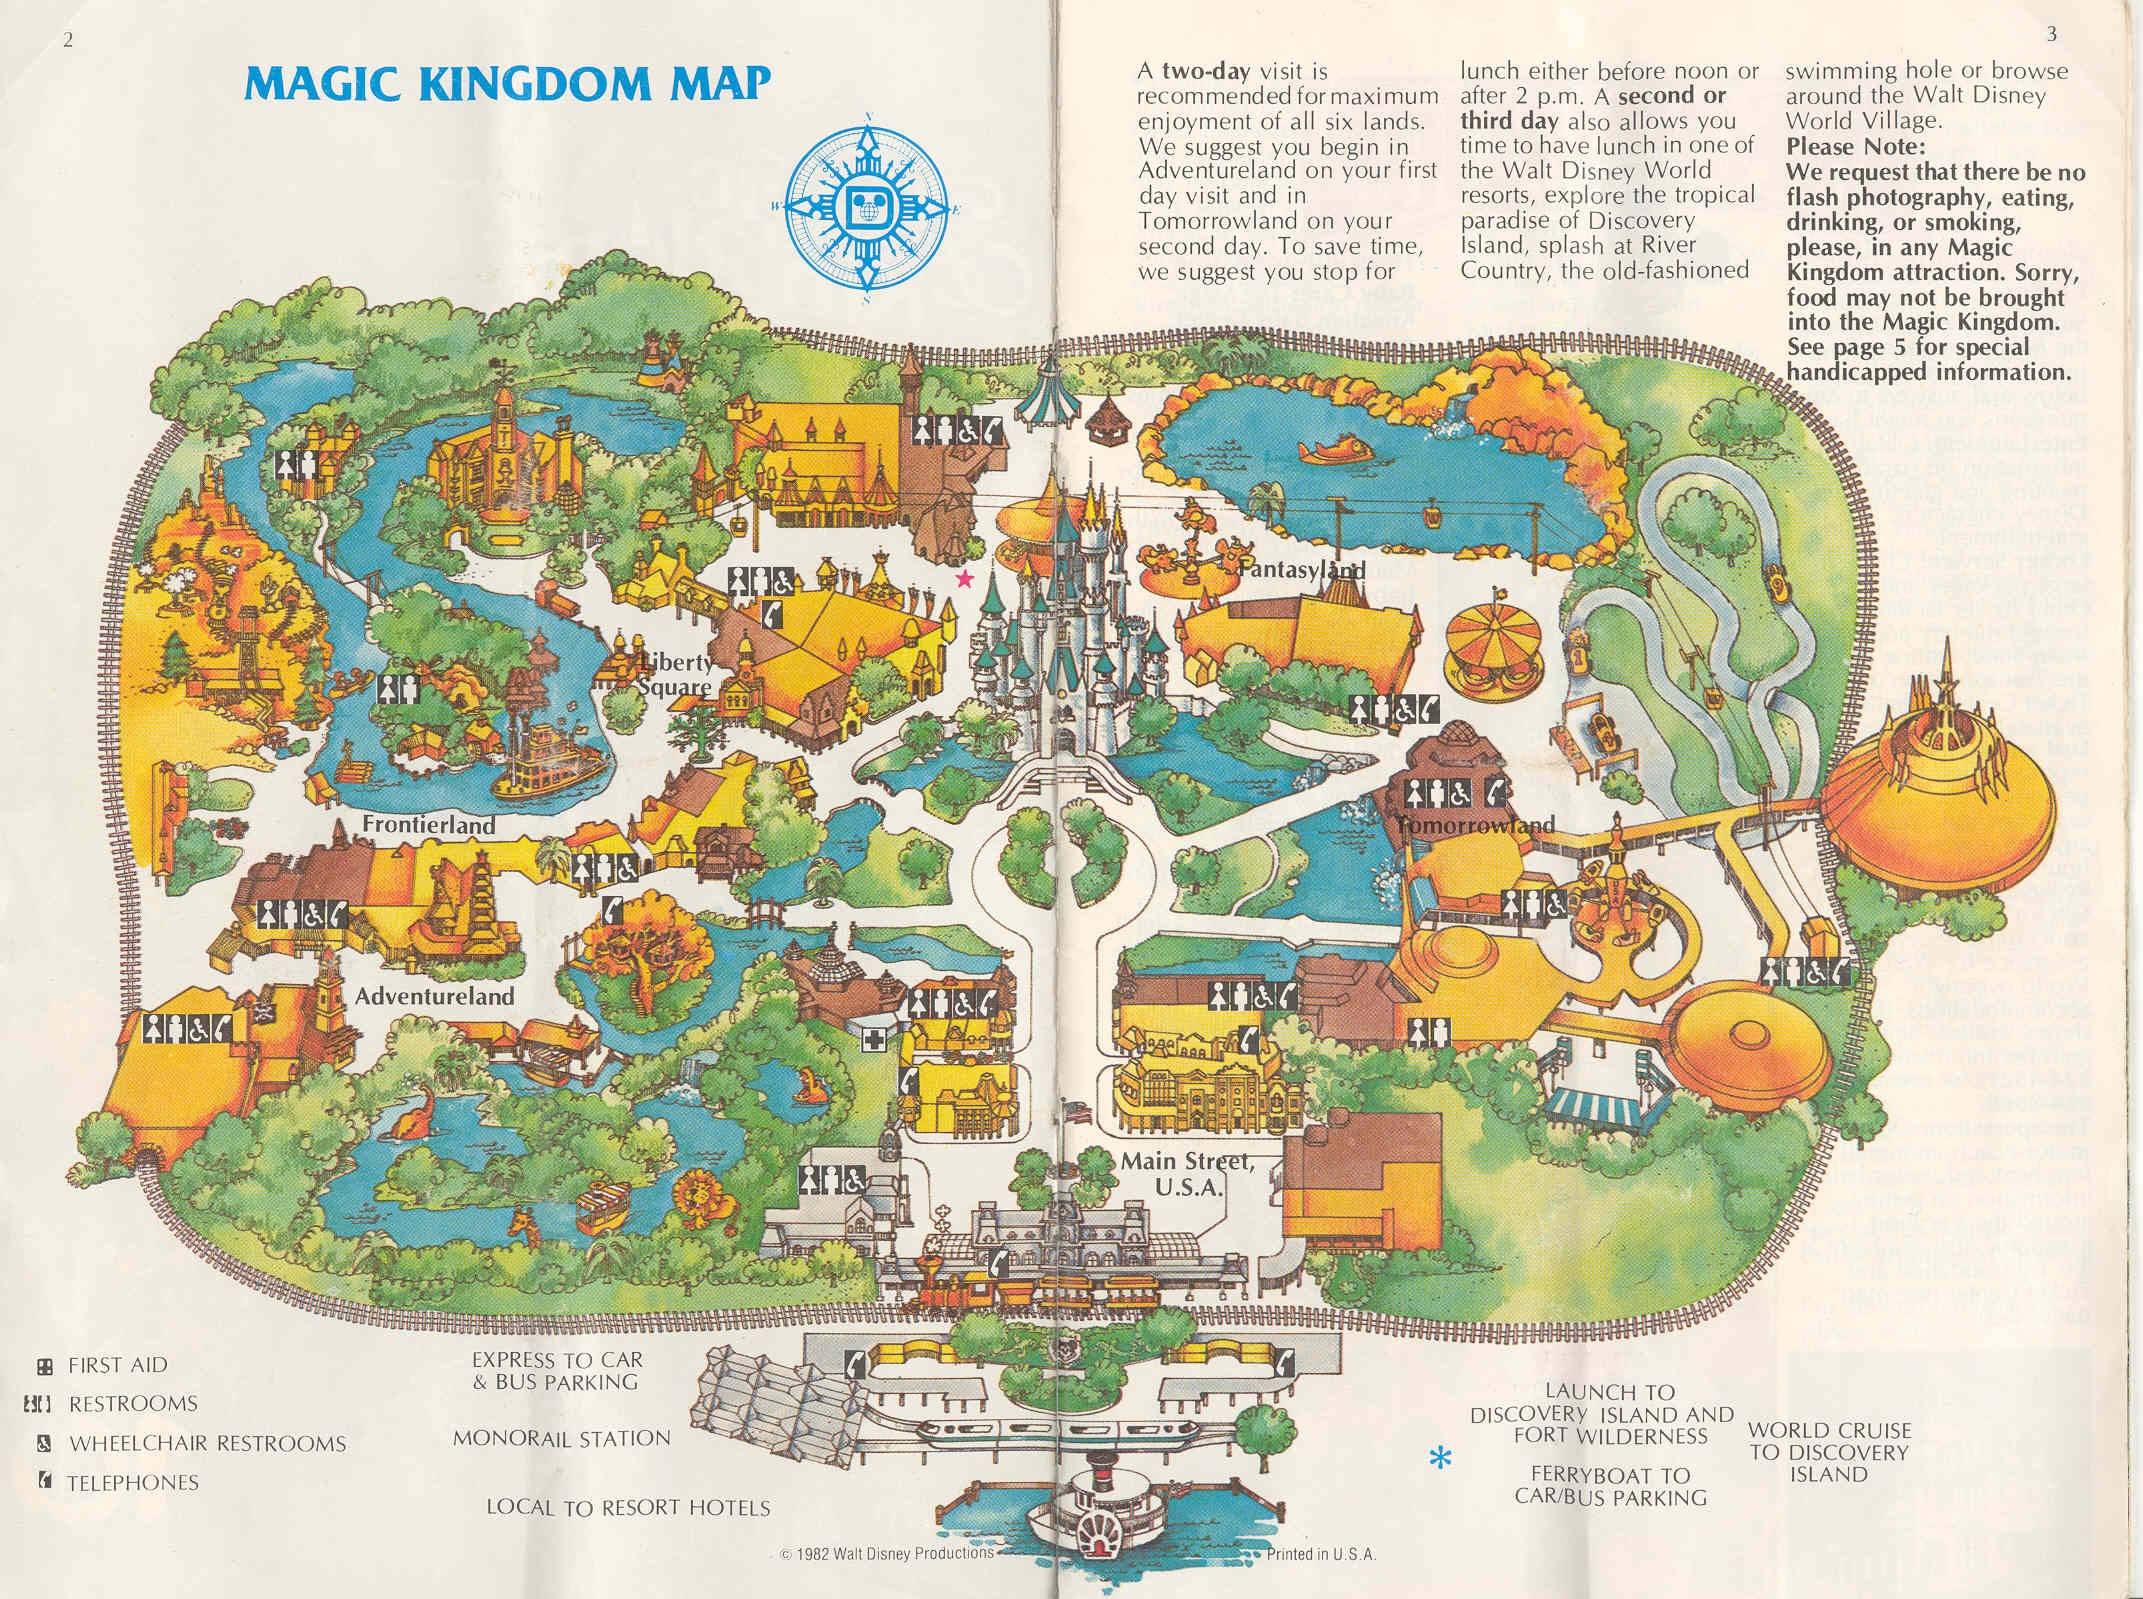 Magic Kingdom Guide Book 1982